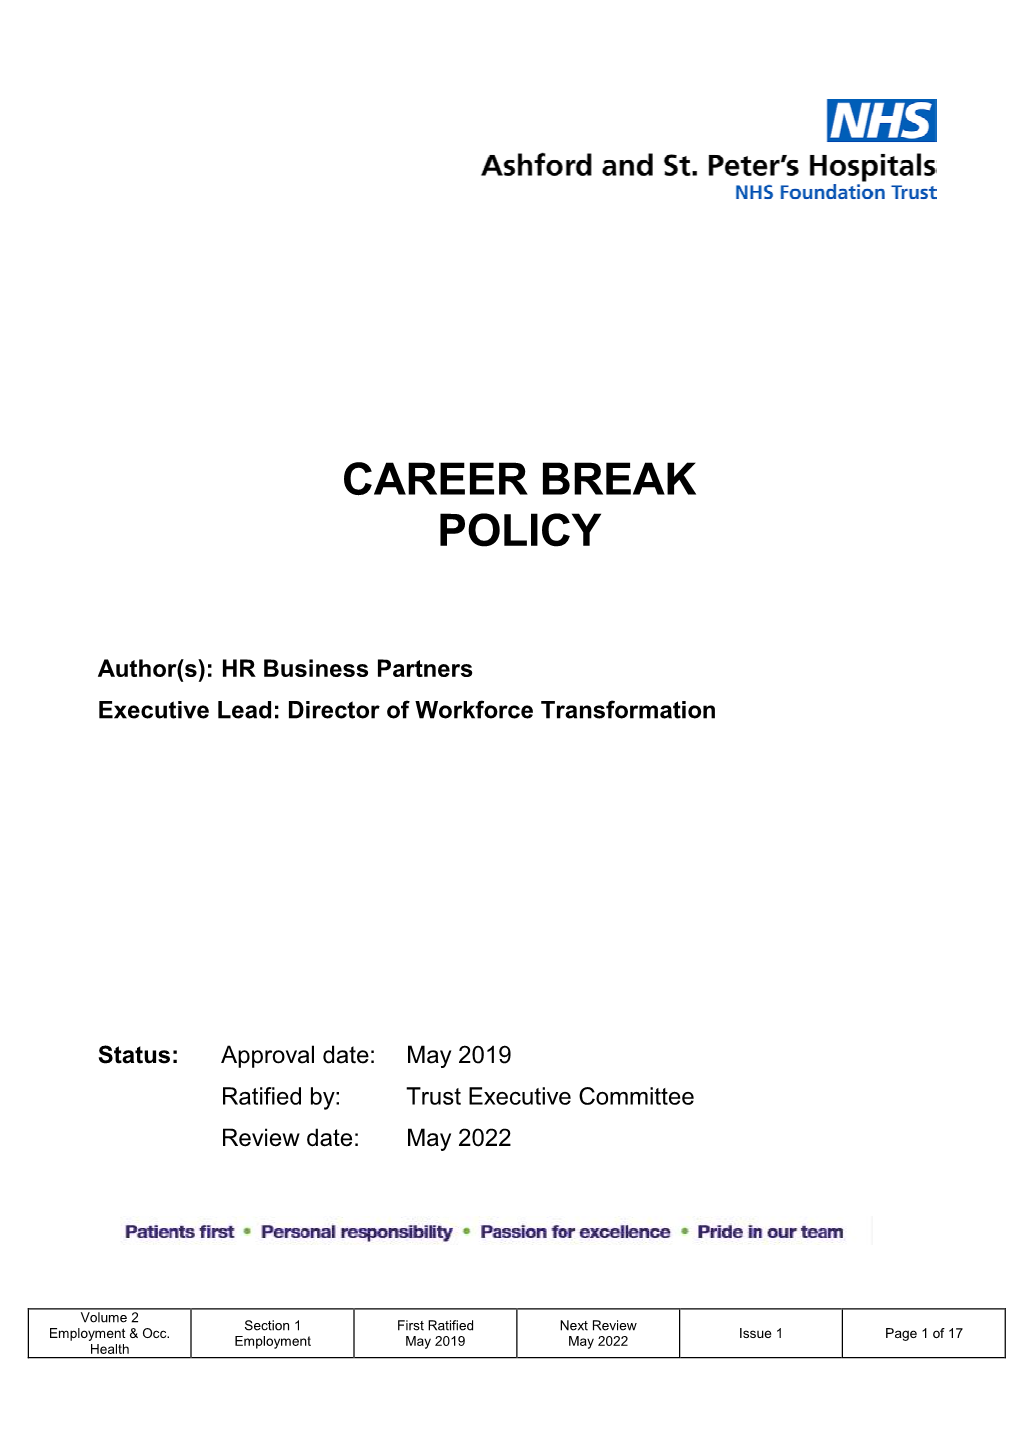 Career Break Policy (May 2019)